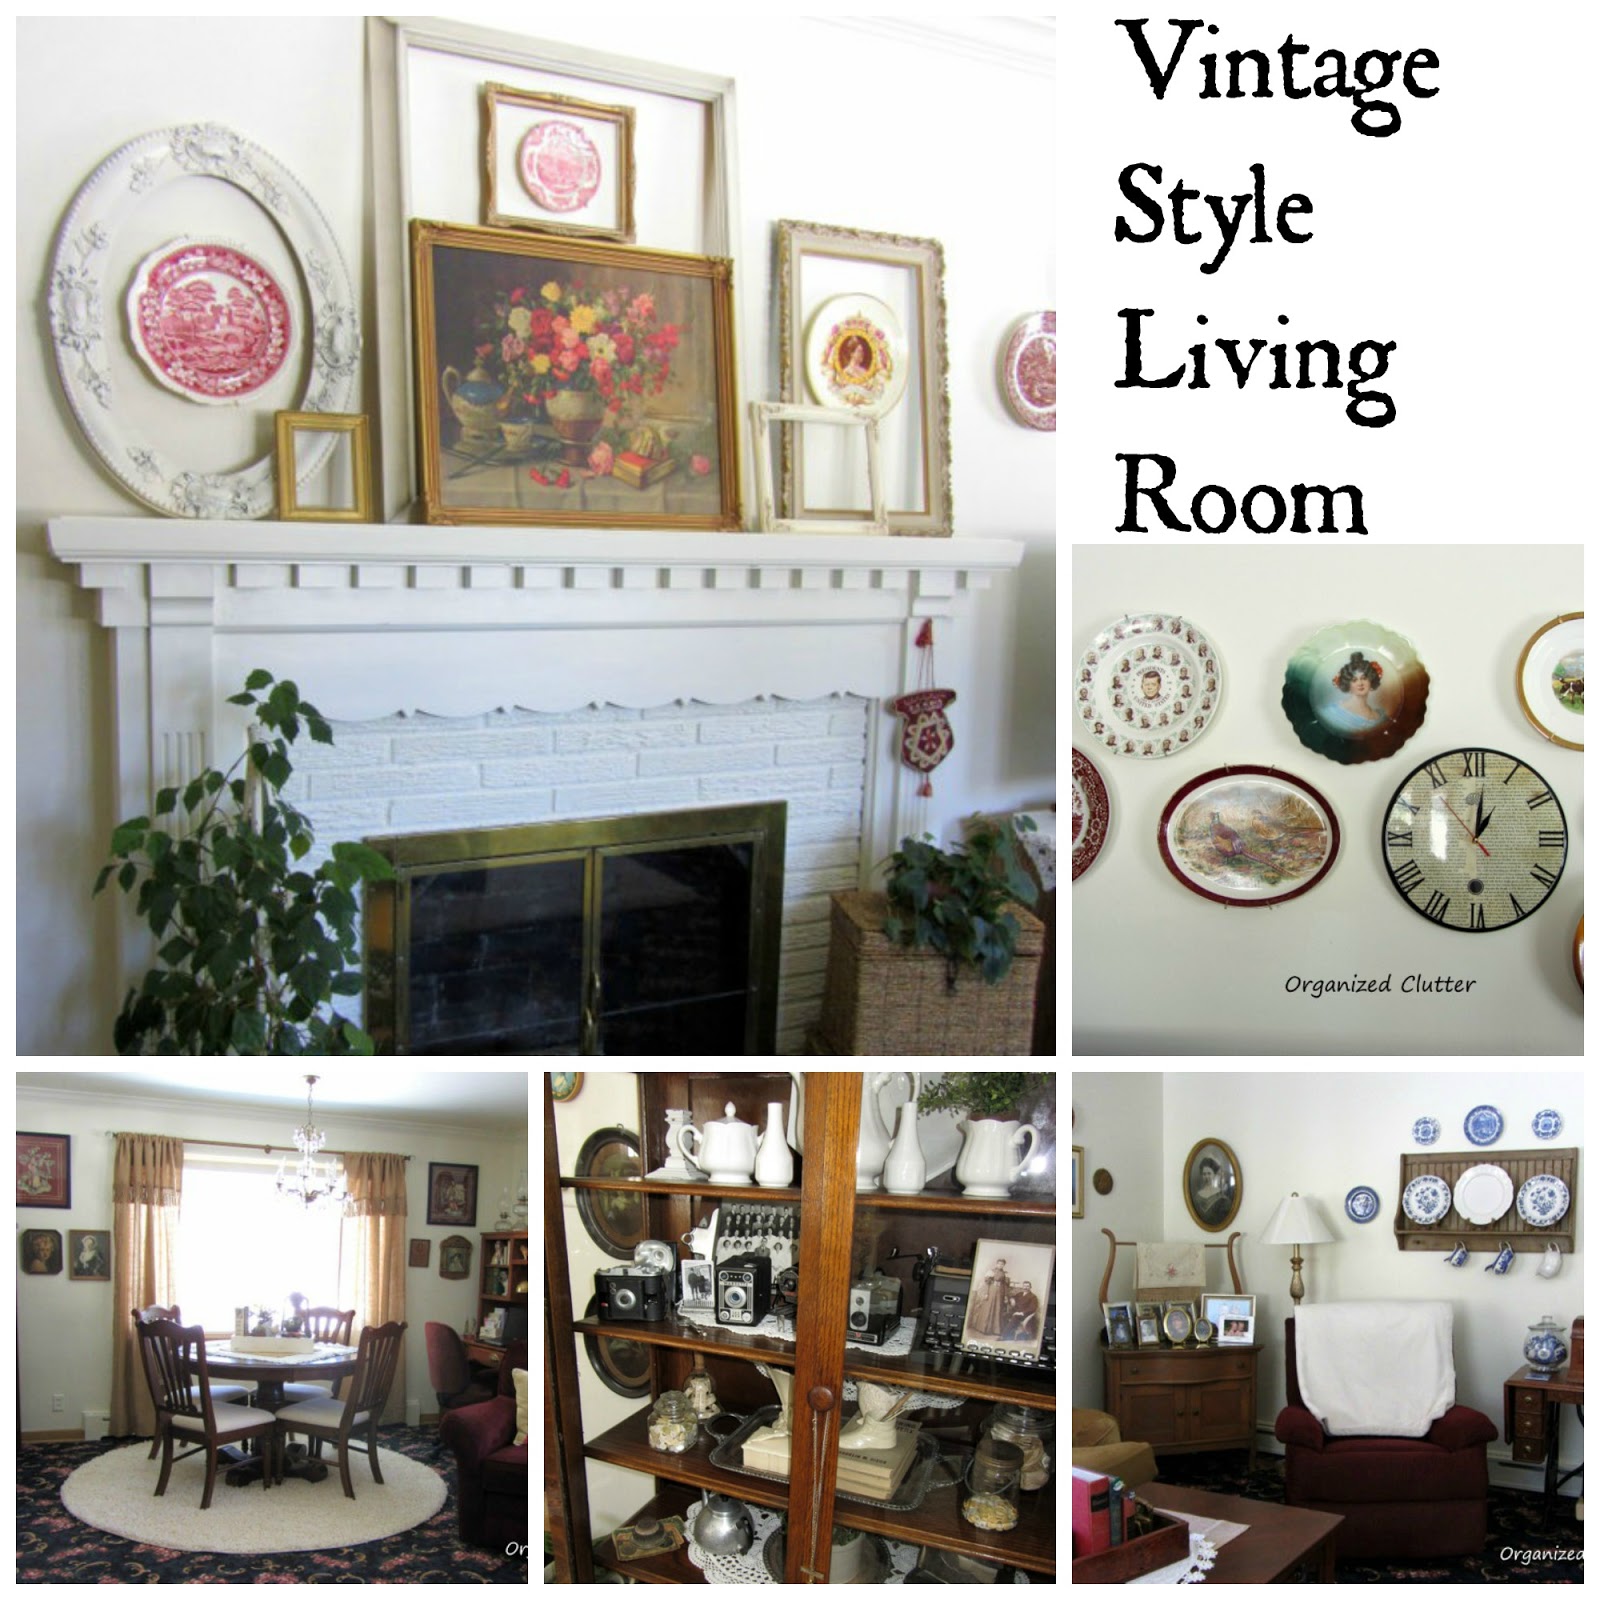 Vintage Living Room Tour www.organizedclutterqueen.blogspot.com